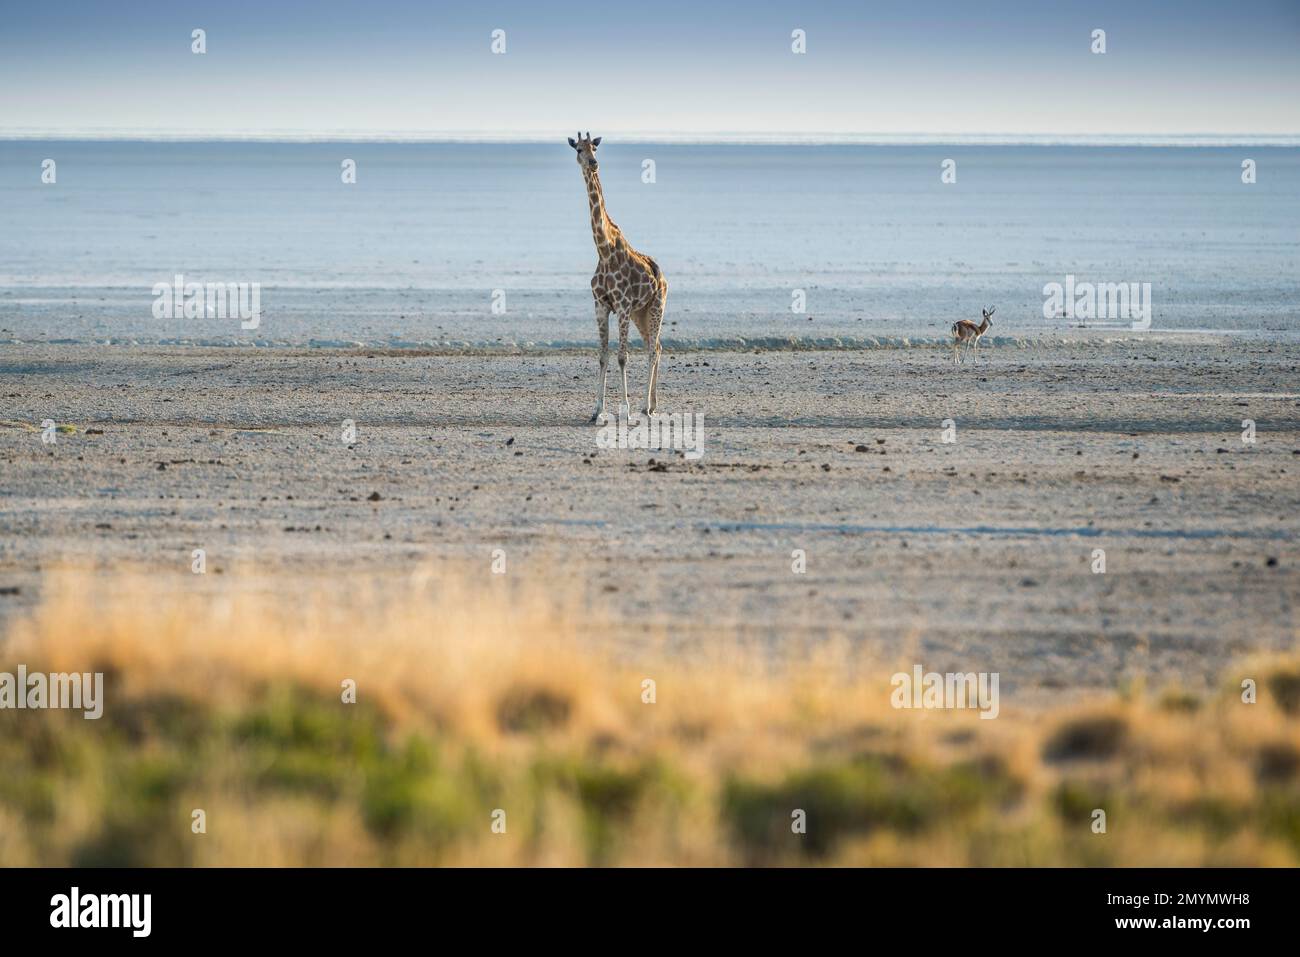 Angolan giraffe (Giraffa camelopardalis angolensis) at the edge of the salt pan, Etosha National Park, Namibia, Africa Stock Photo